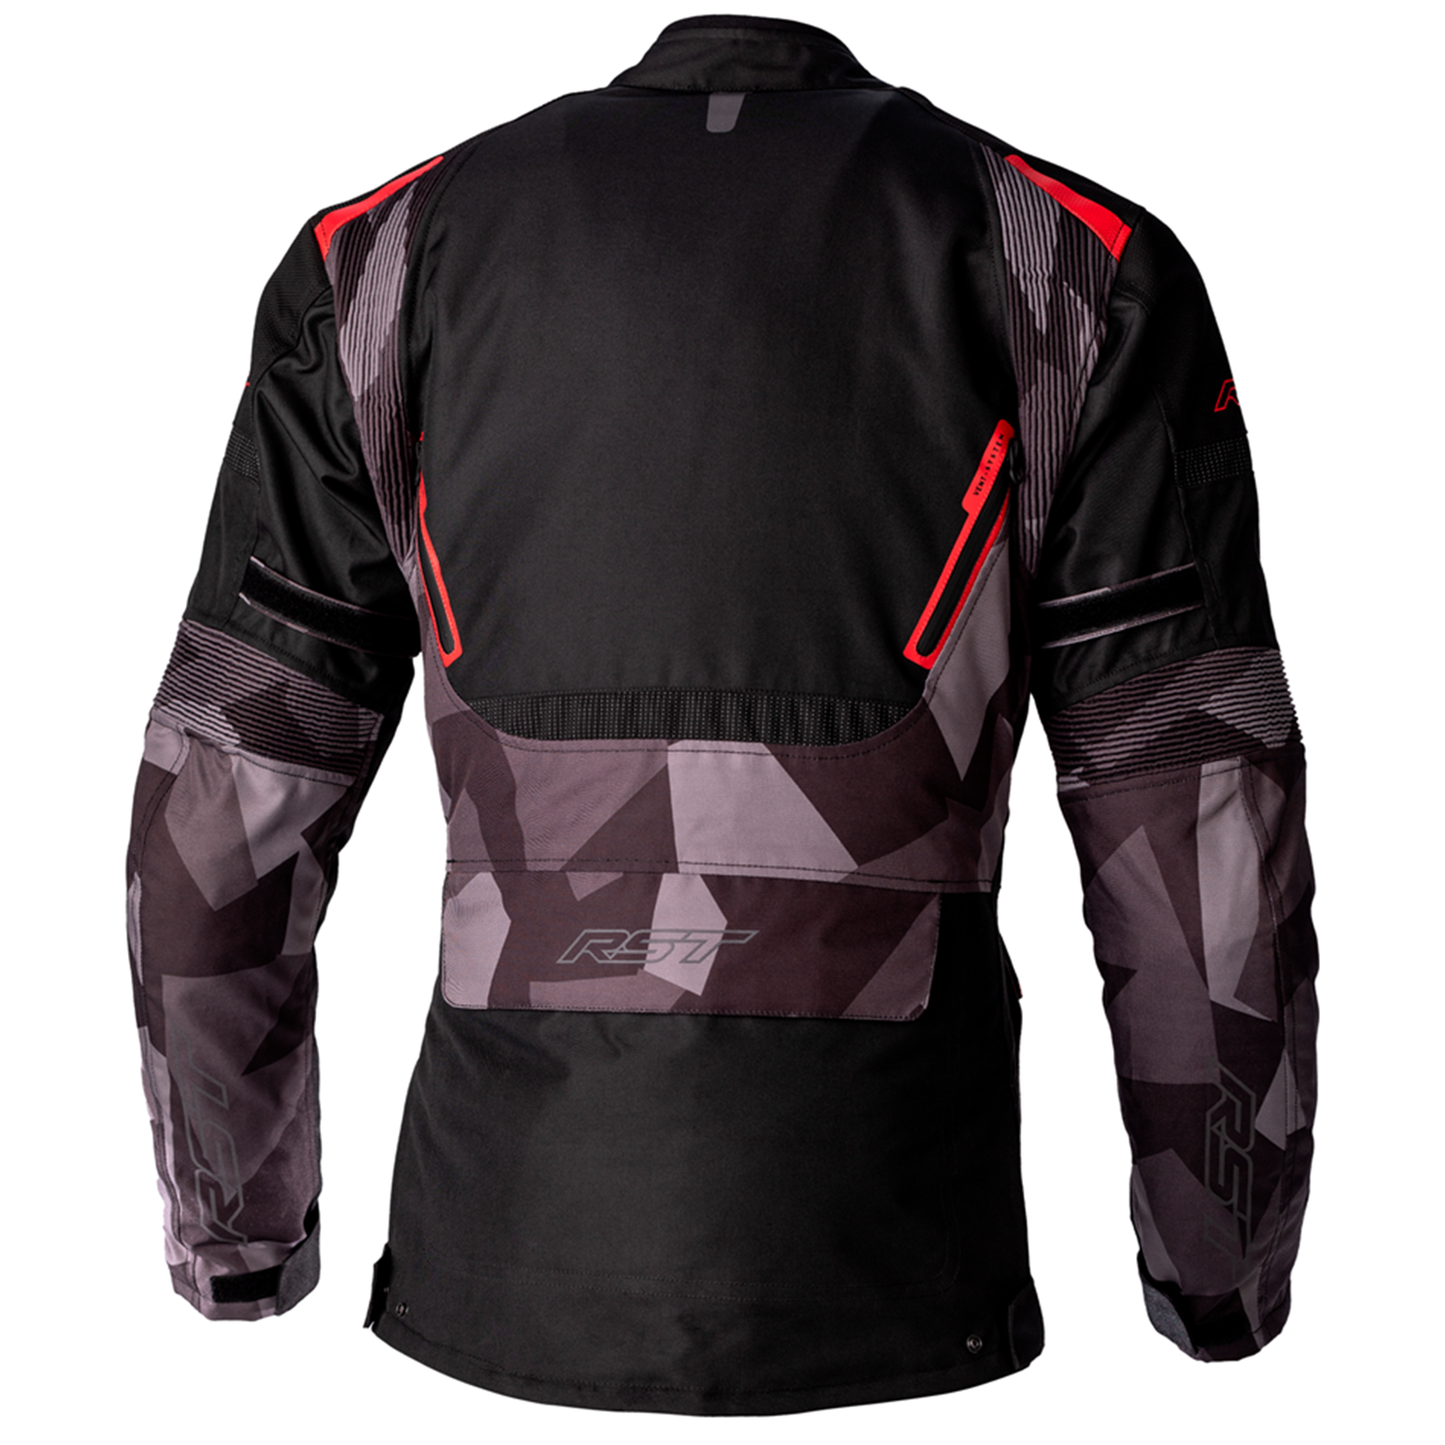 RST Endurance Men's Textile Jacket - Black/Camo/Red